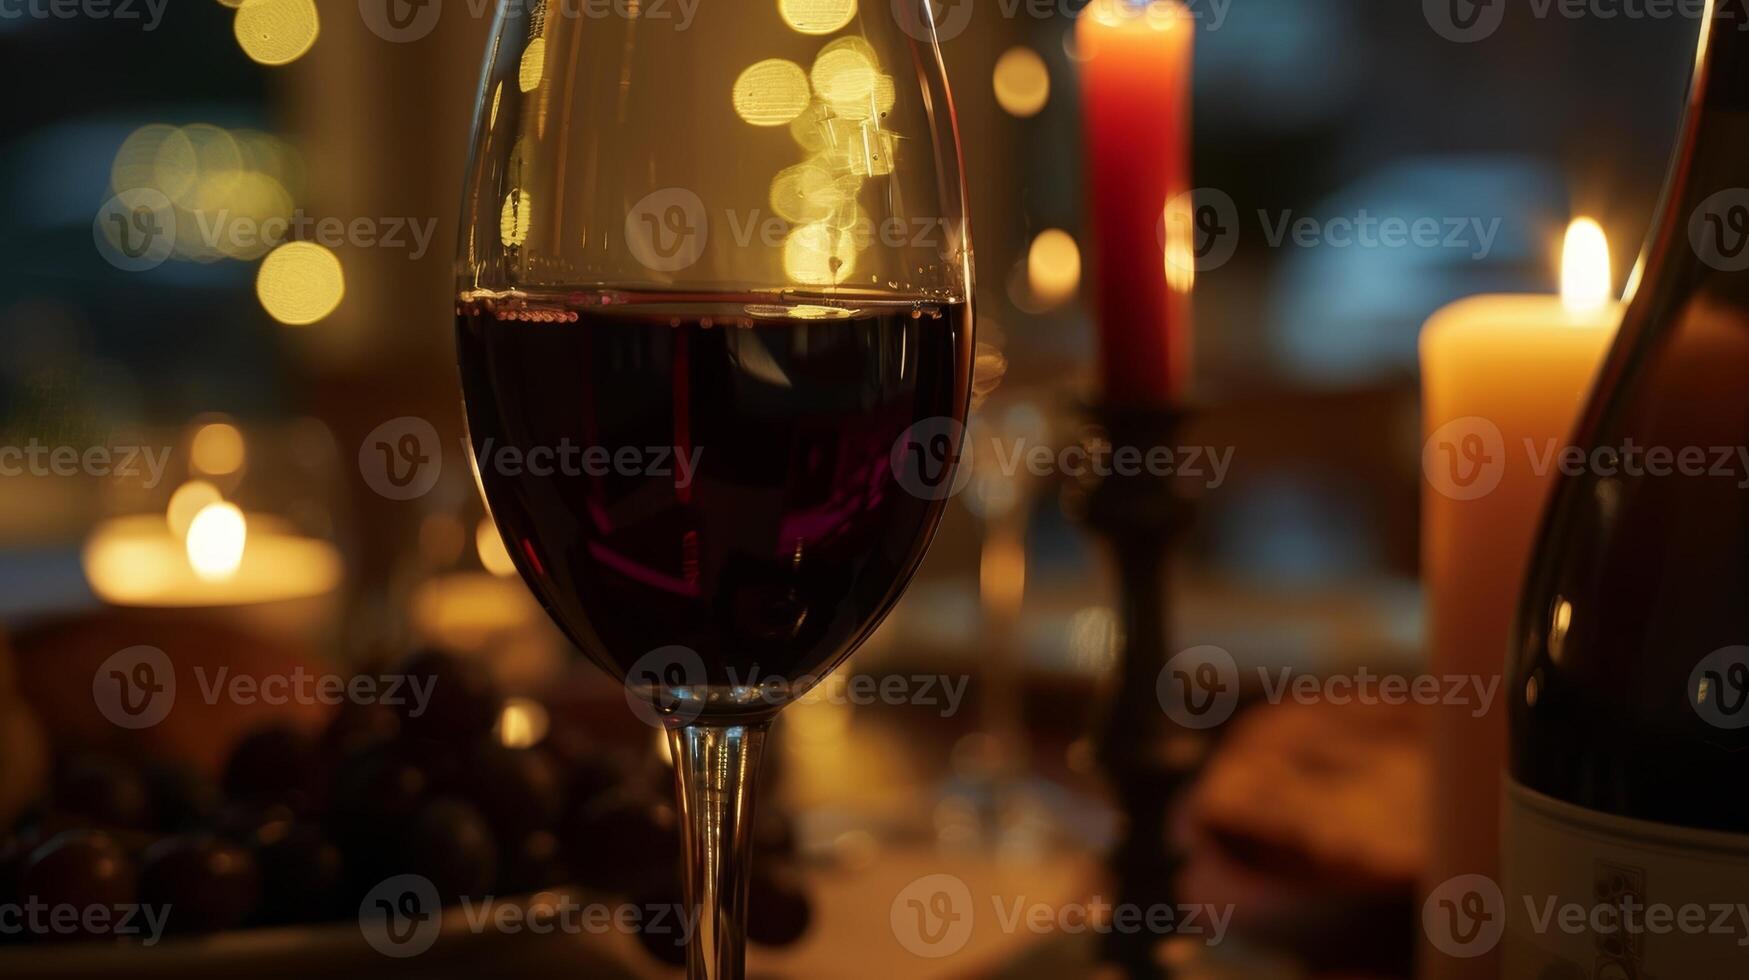 de rik gyllene nyans av de levande ljus perfekt kompletterar de djup röd toner av de fyllig vin varelse smakade. 2d platt tecknad serie foto